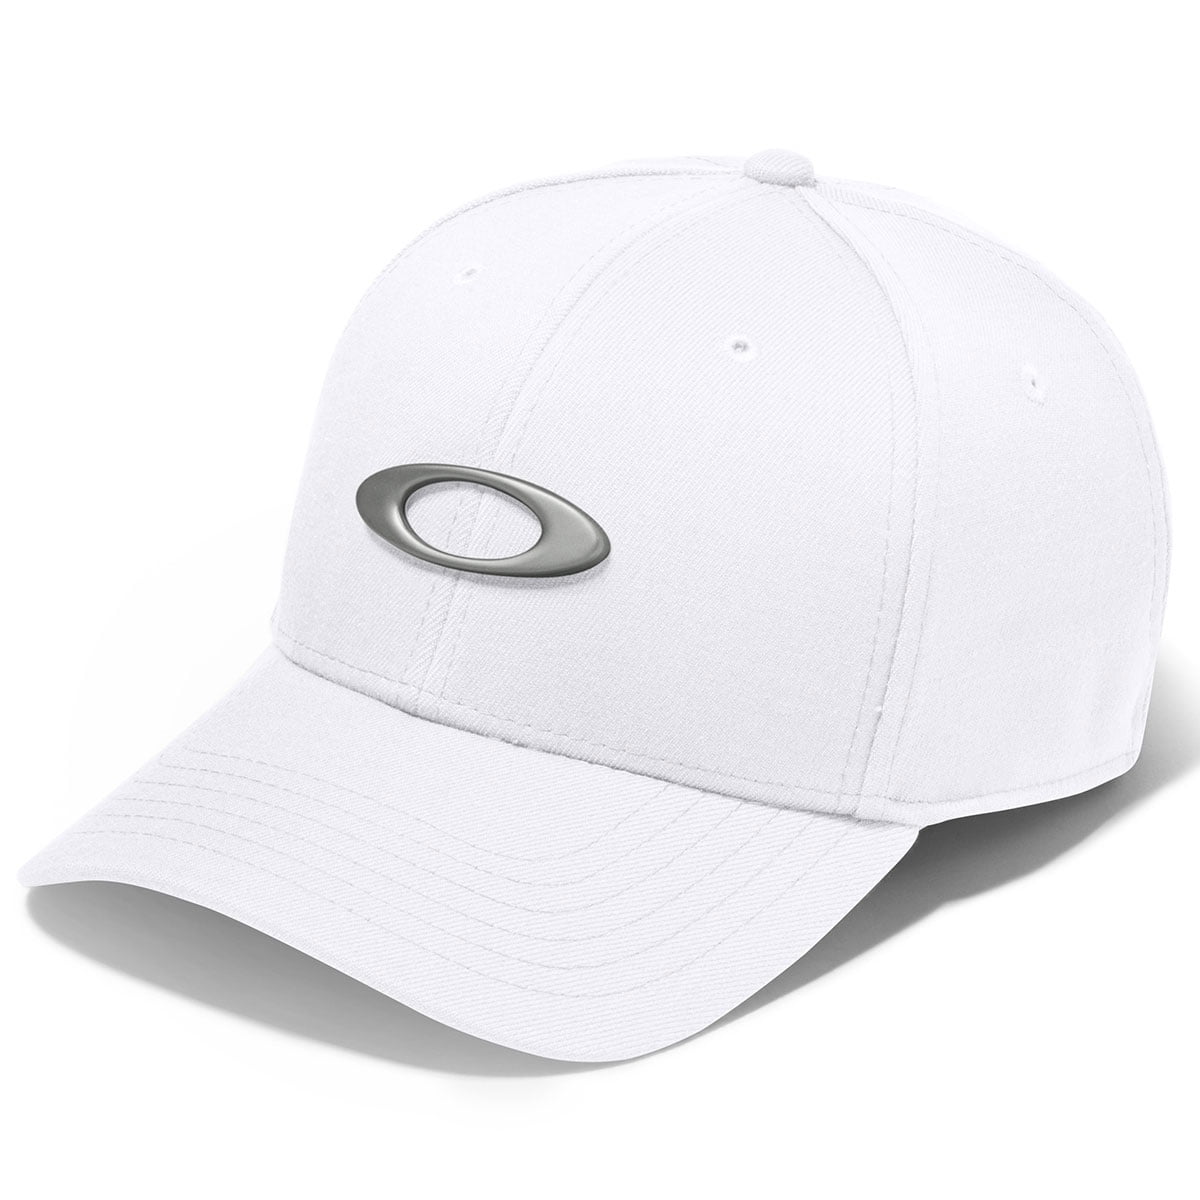 NEW Oakley Tincan White/Silver Fitted L/XL Golf Hat/Cap - Walmart.com ...